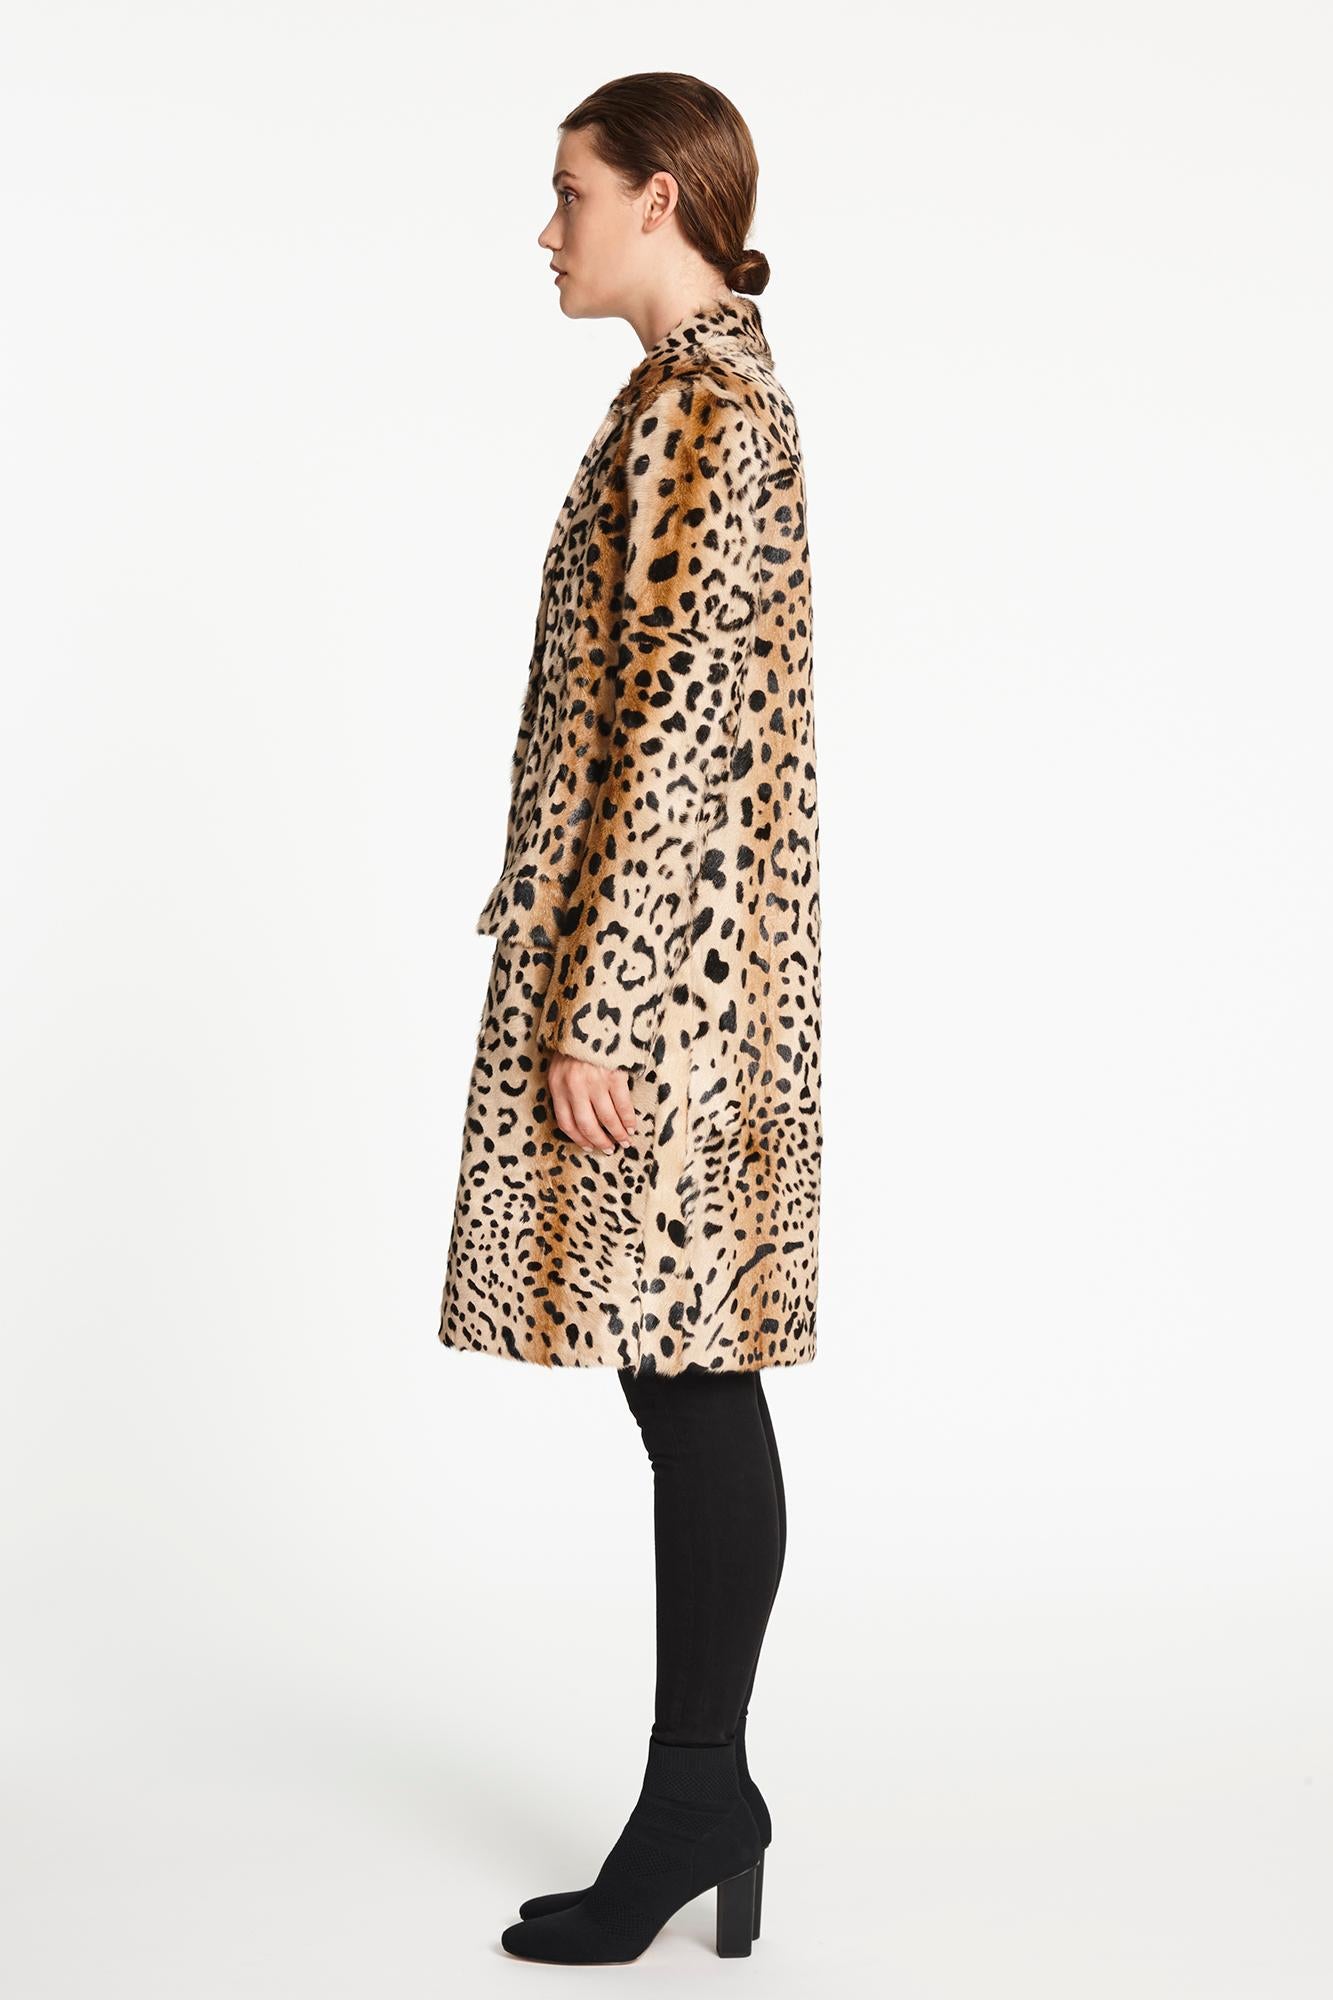 Verheyen London Leopard Print Coat in Red Ruby Goat Hair Fur UK 12 - Brand New  5